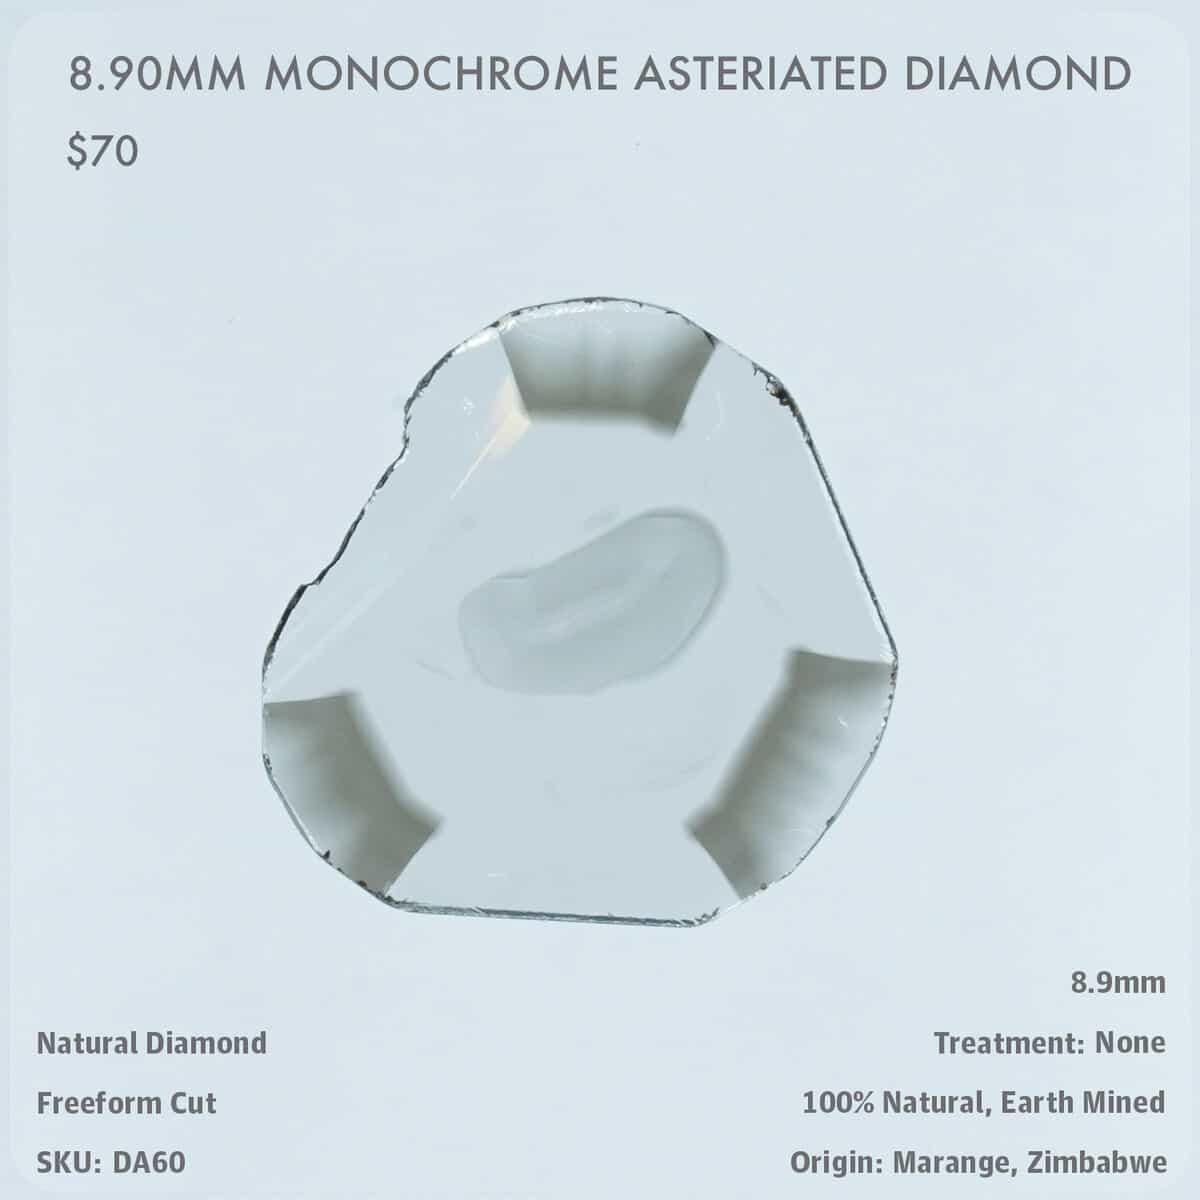 8.90mm Monochrome Asteriated Diamond